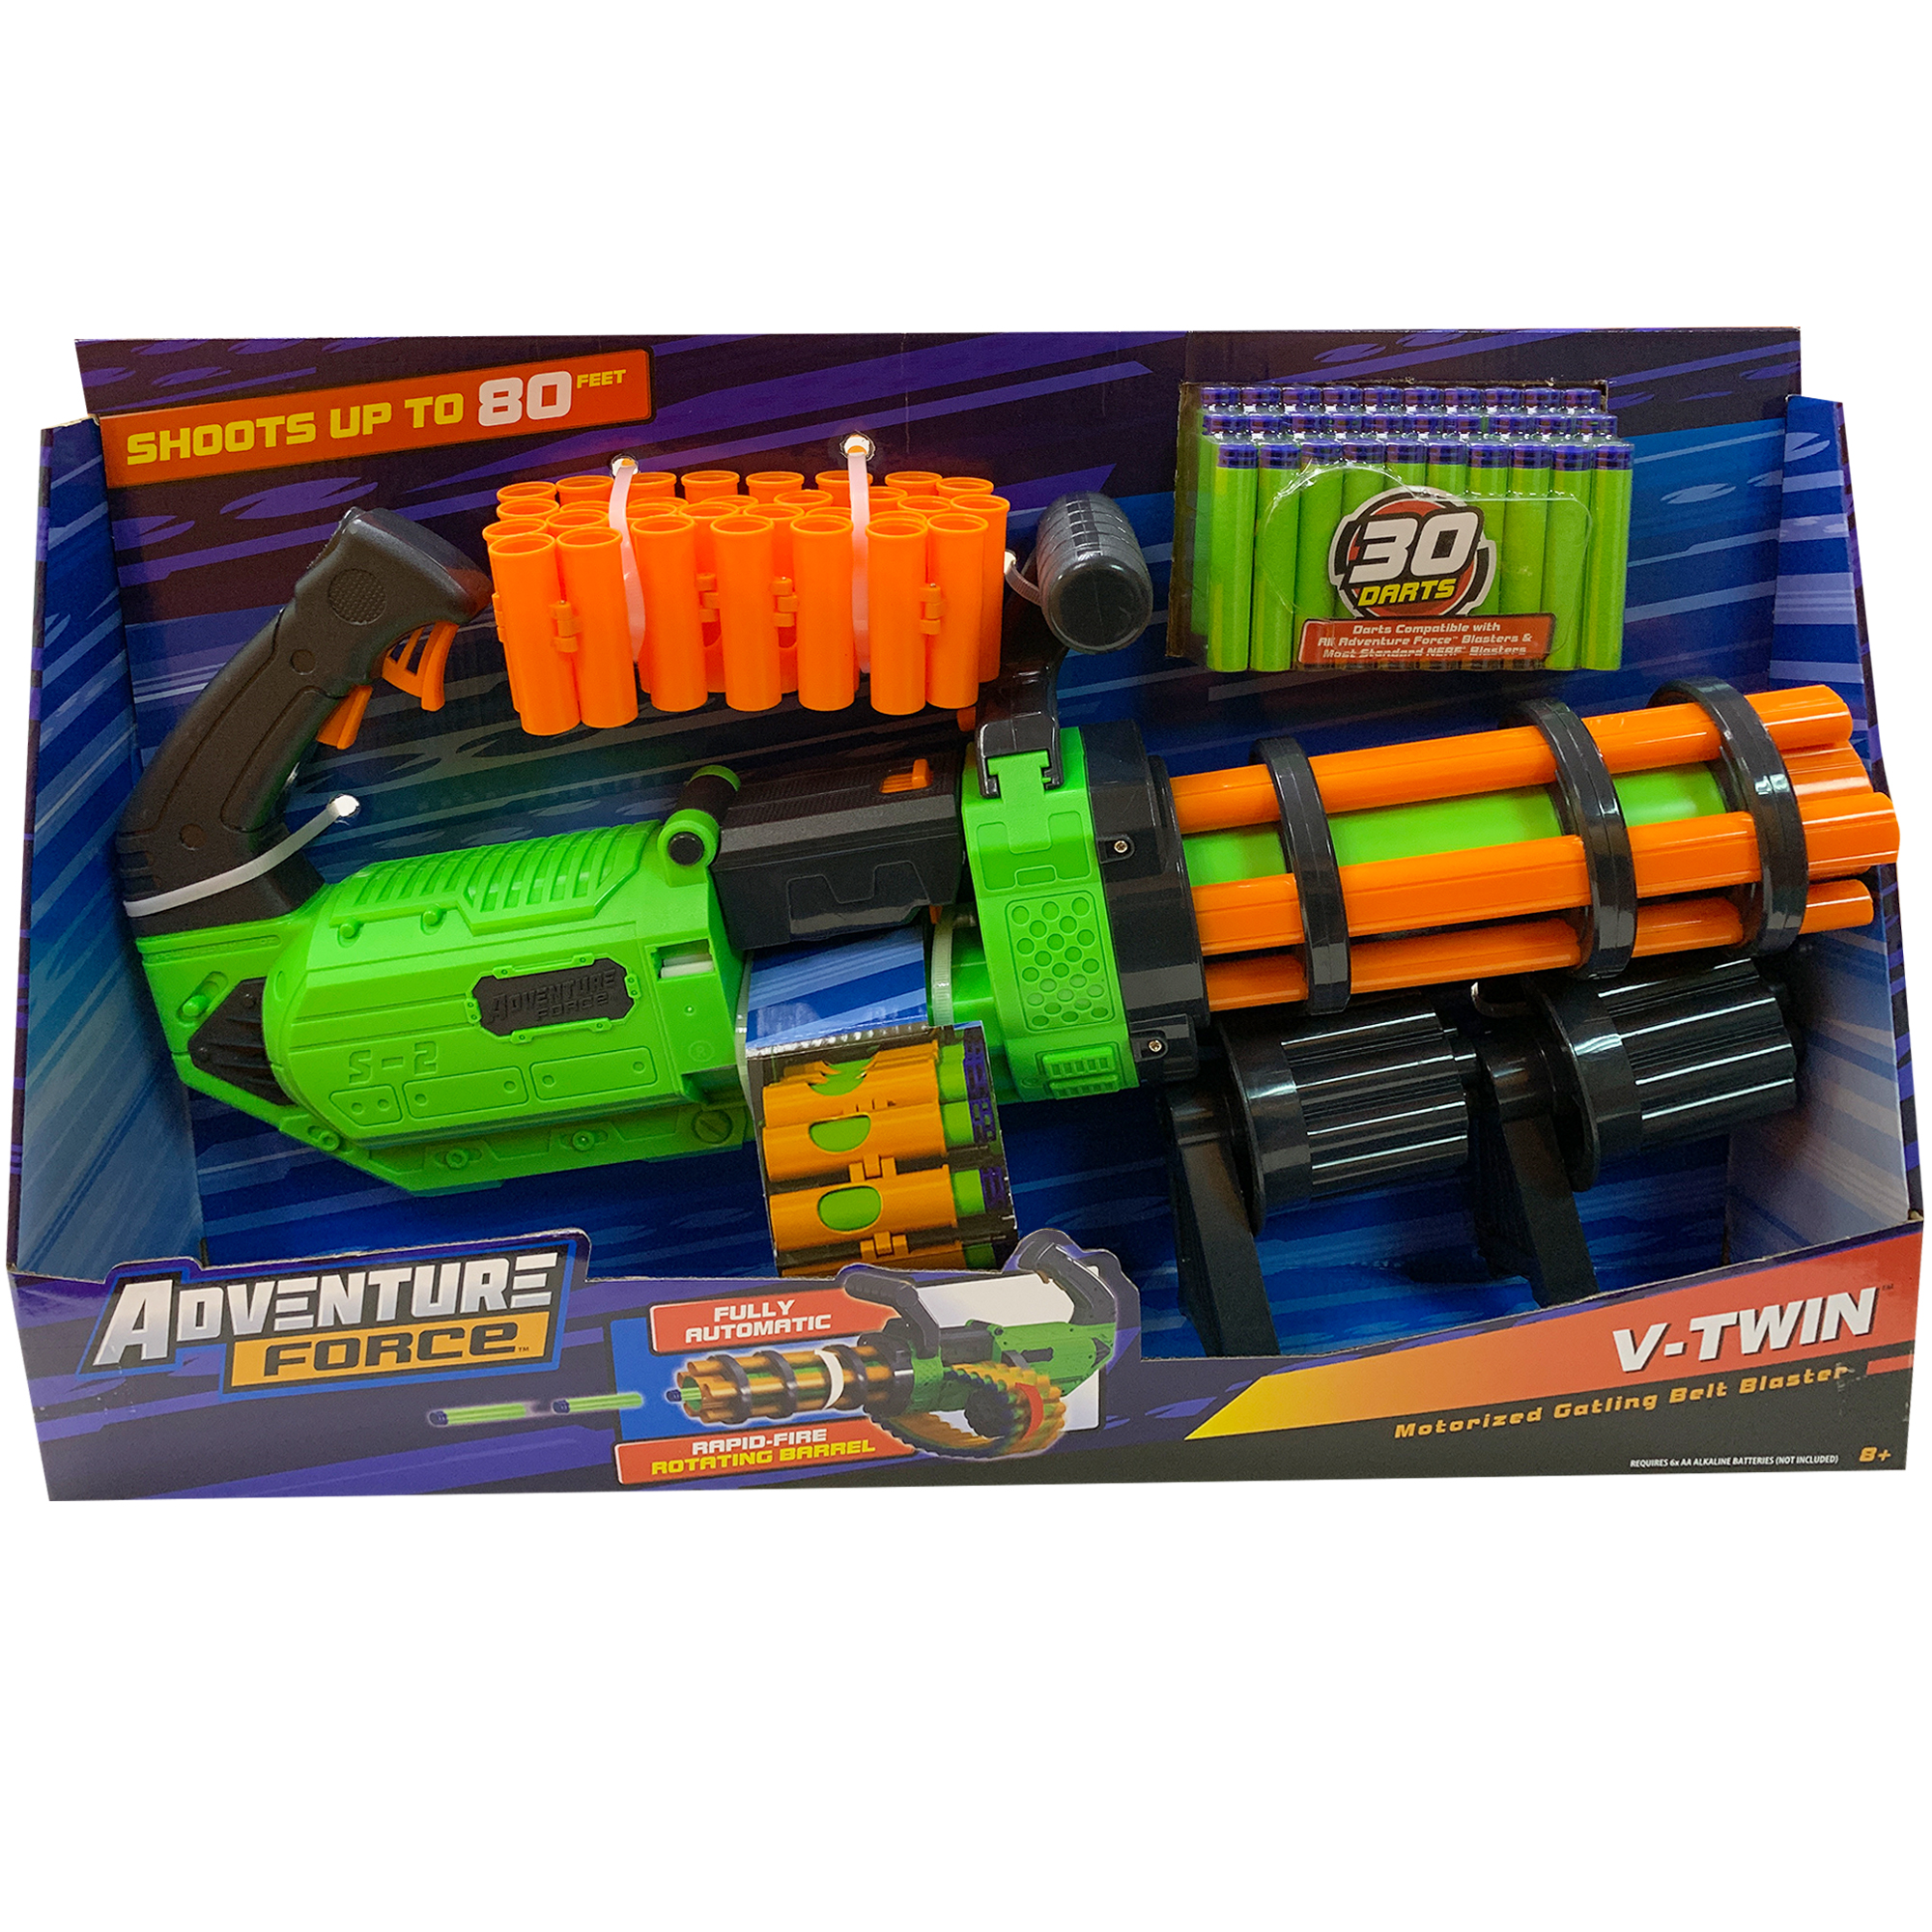 Adventure Force Motorized Gatling Belt Dart Blaster Toy Gun Kids Gift Fits Nerf Ebay